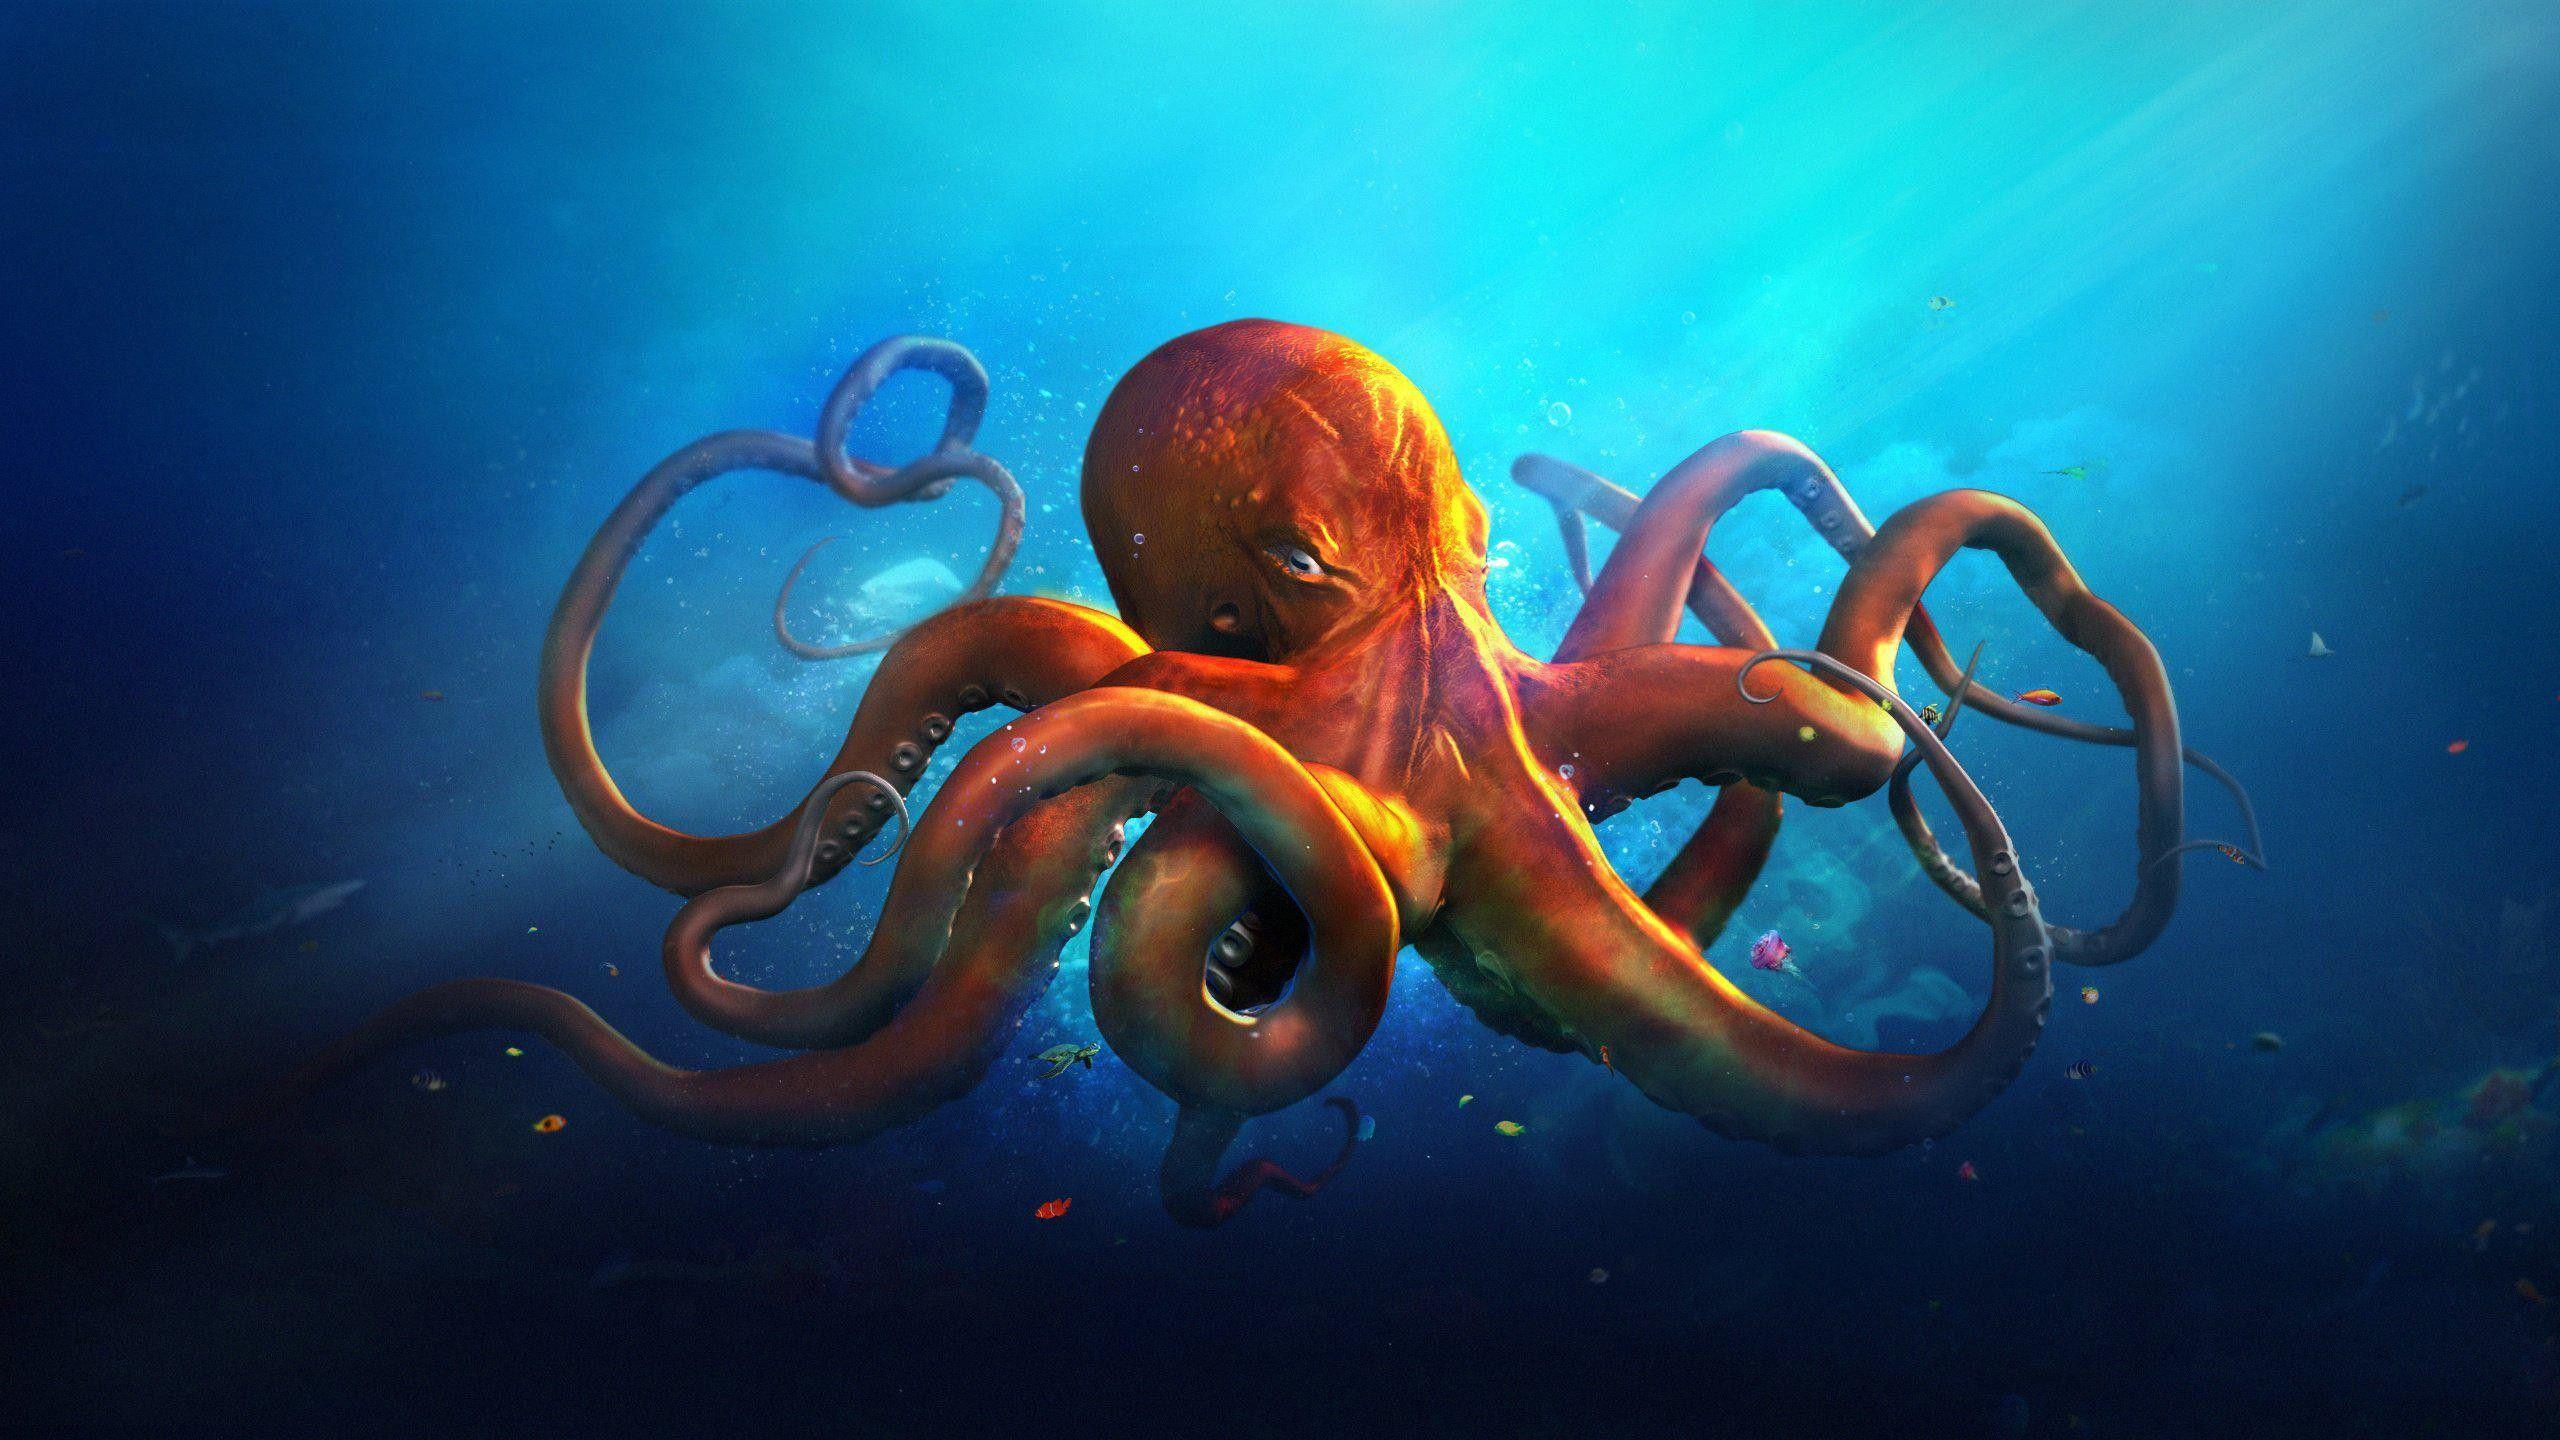 sea creature HD Photo. Desktop Background Wallpaper Image